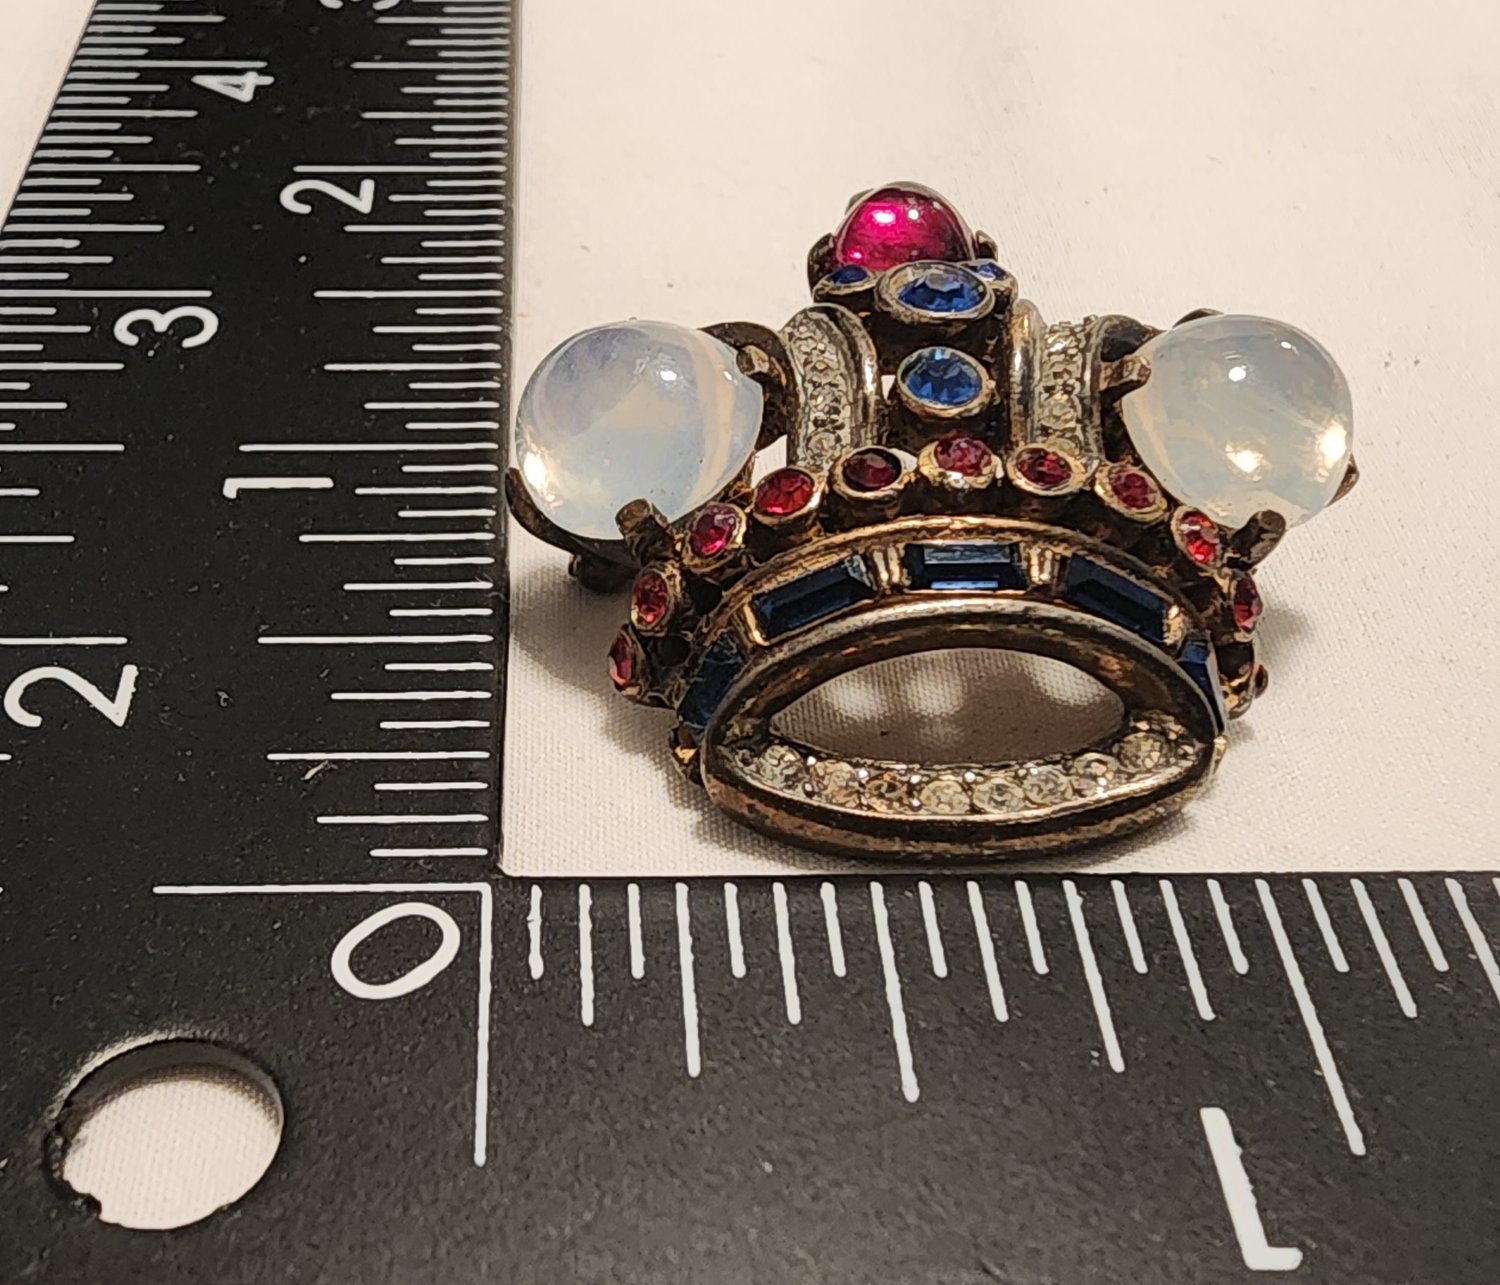 Vintage chanel pearl brooch - Gem